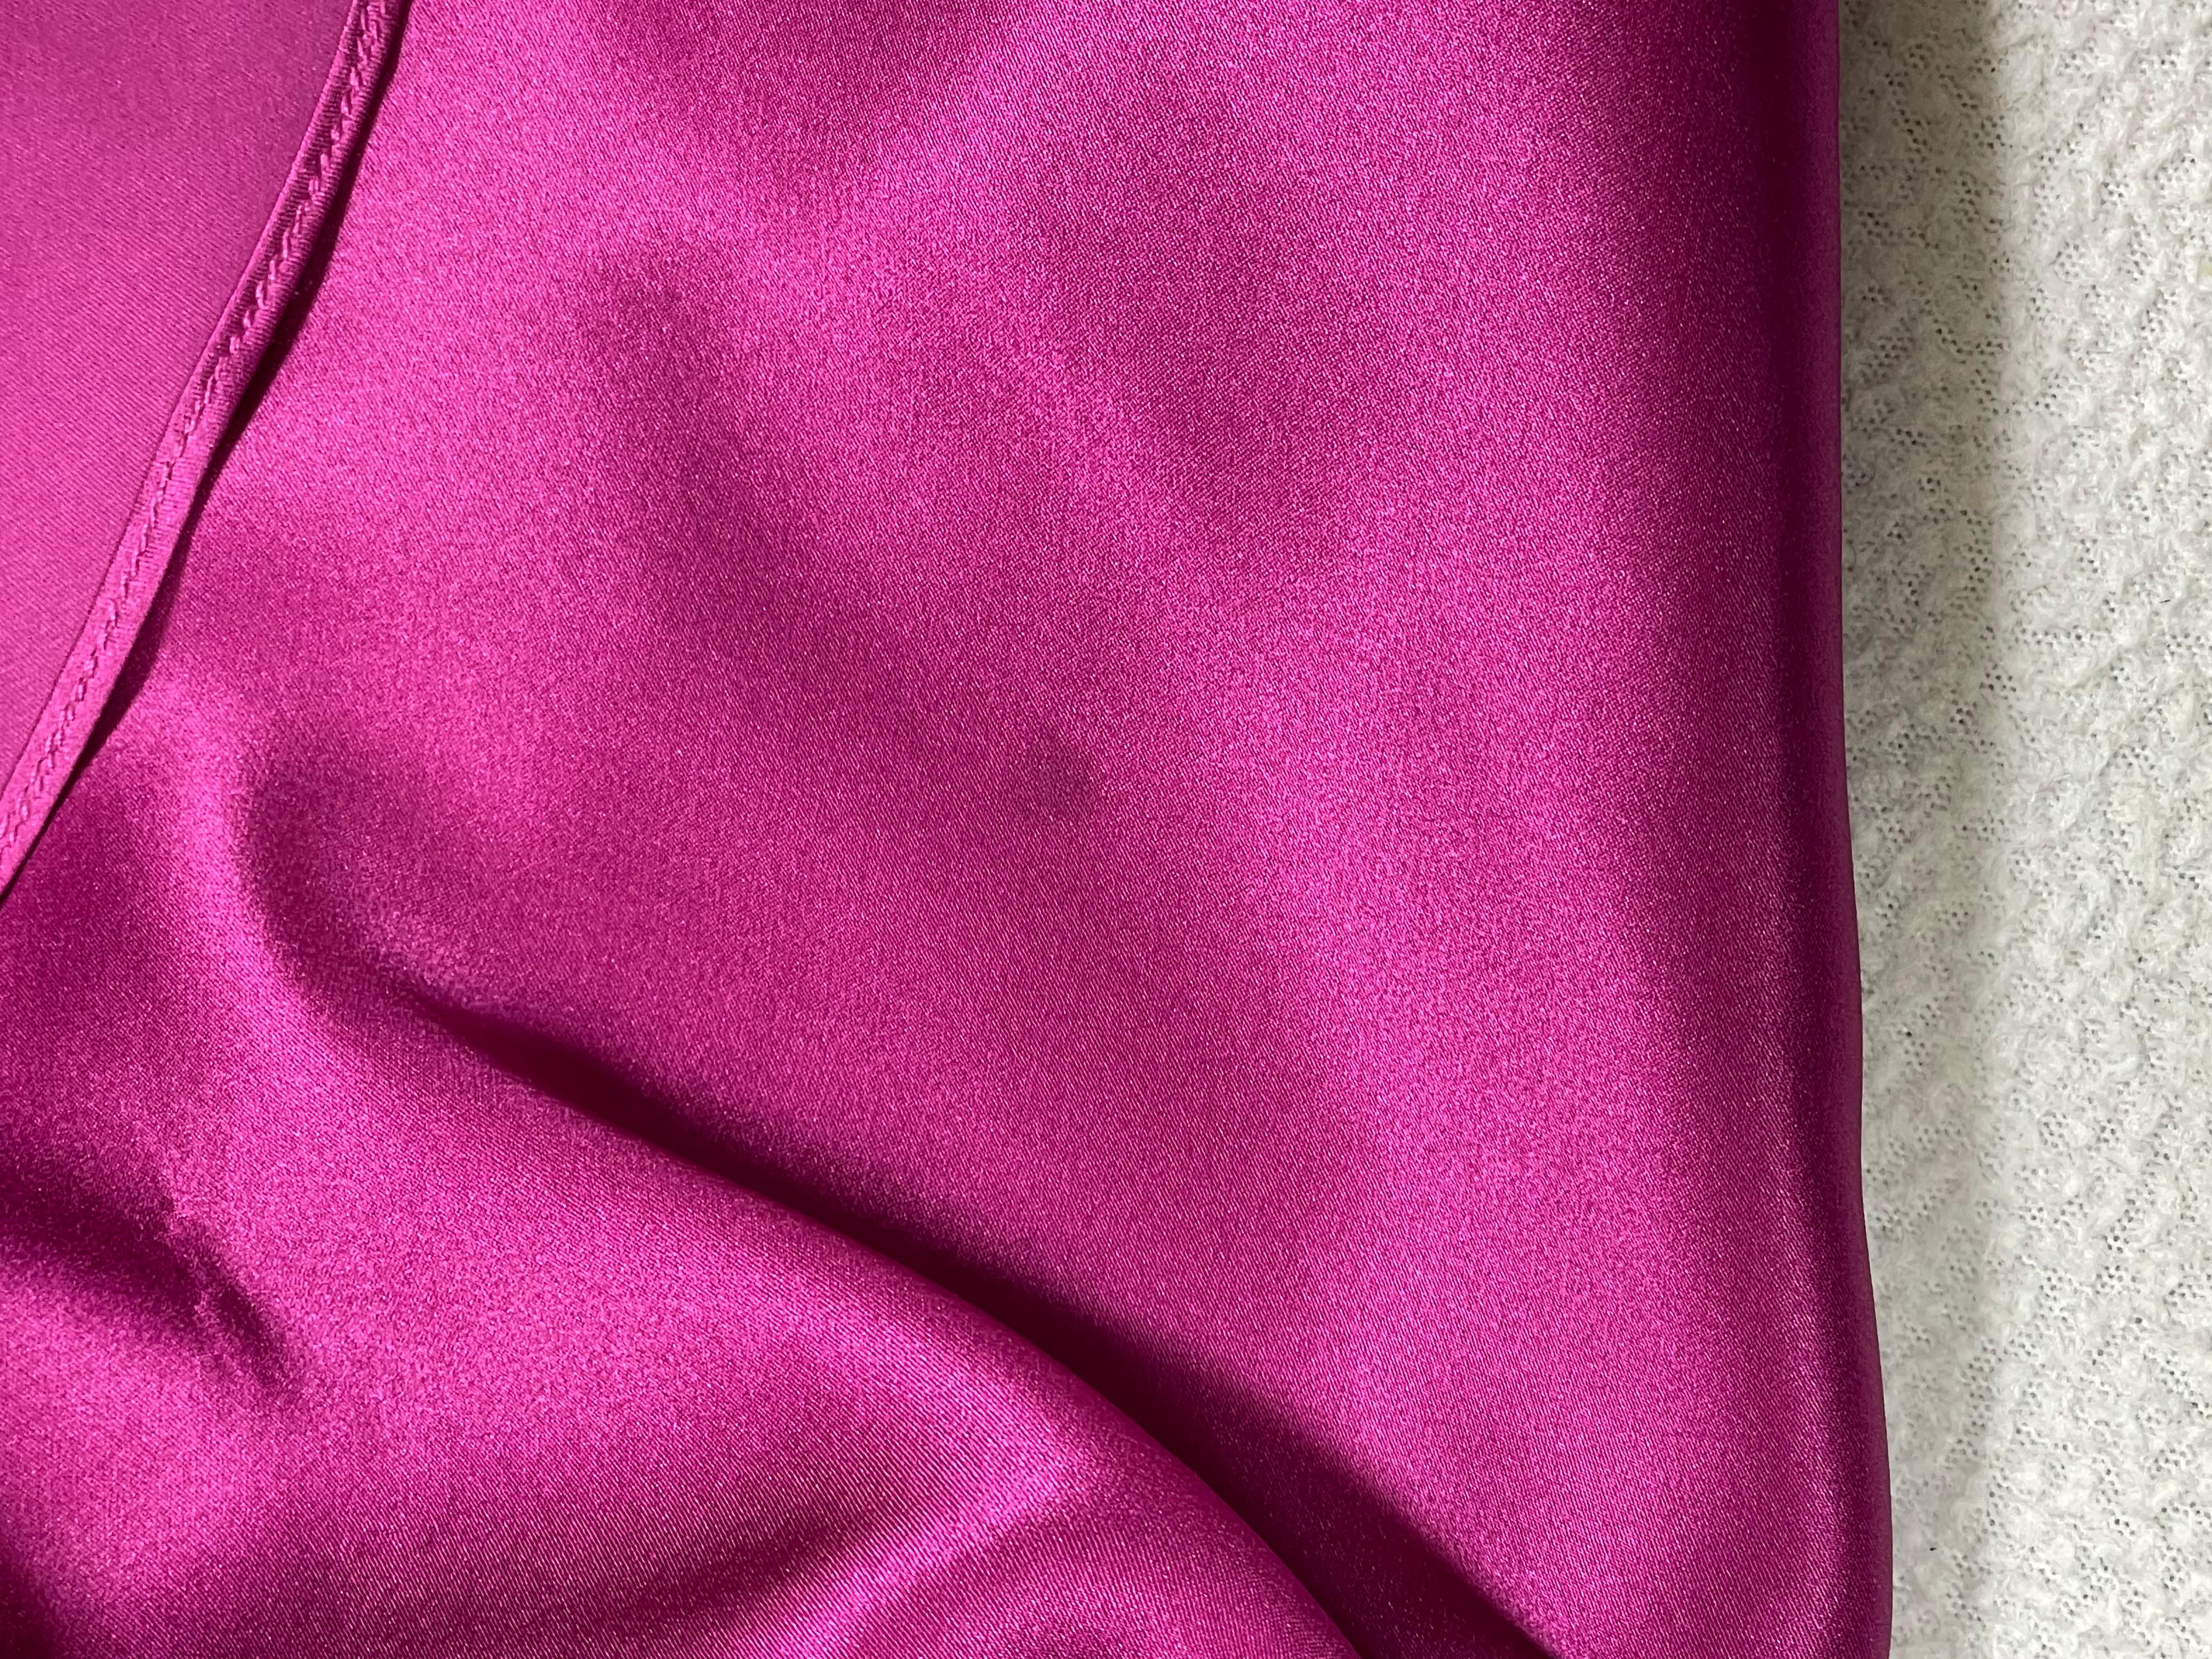  S/S 2010 Christian Dior by John Galliano Hot Pink Silk Lingerie Slip Dress 2